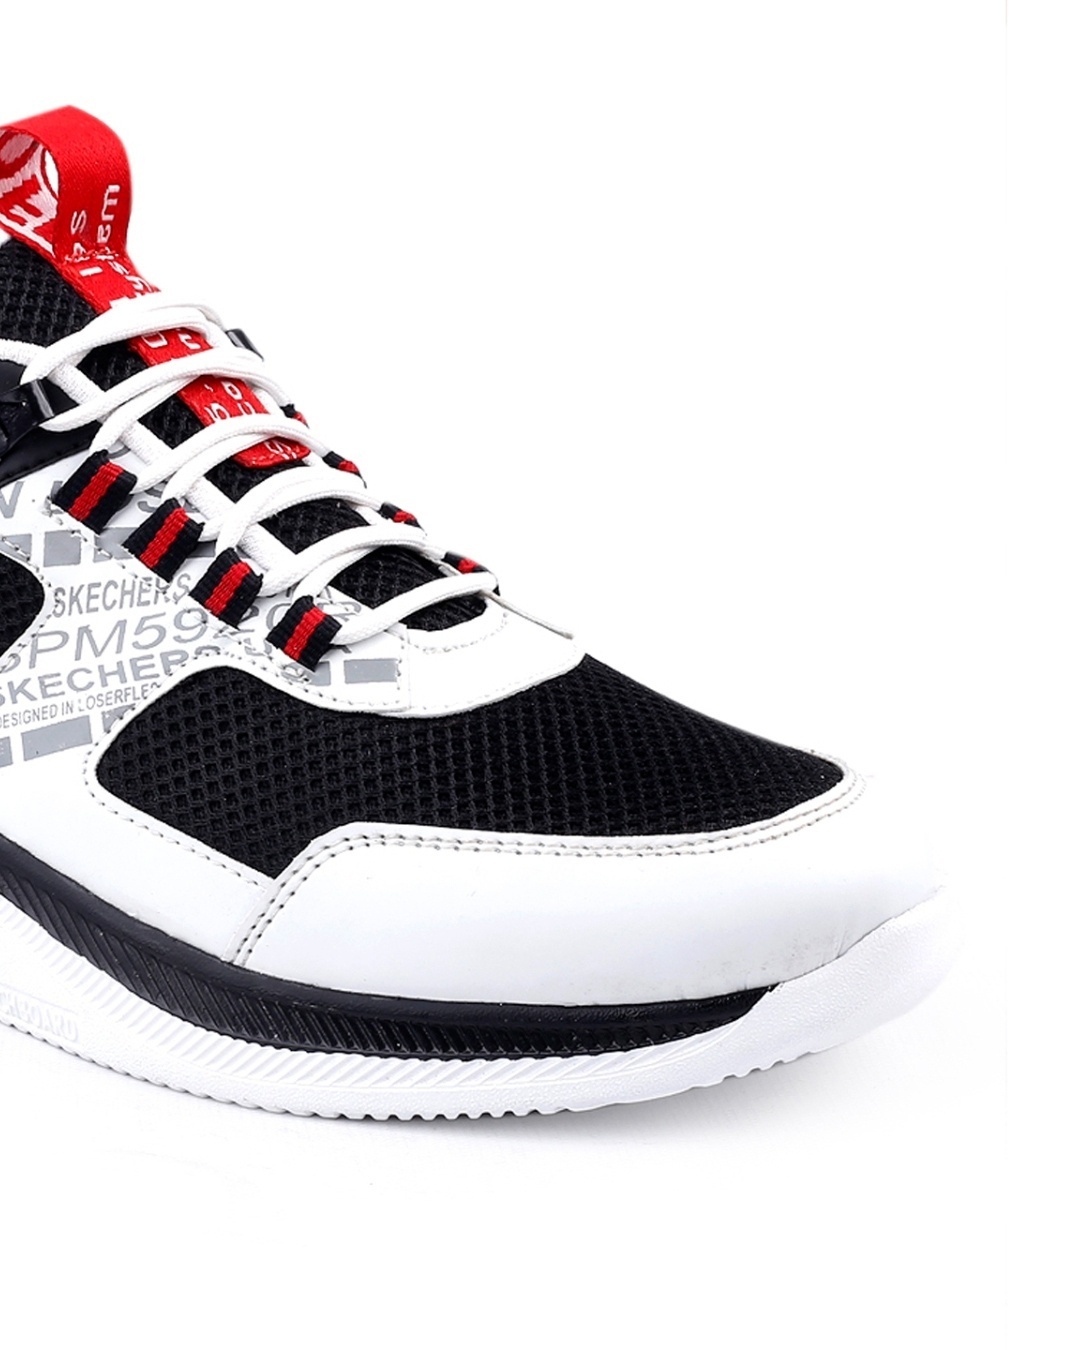 Shop Men's White and Black Color Block Sneakers